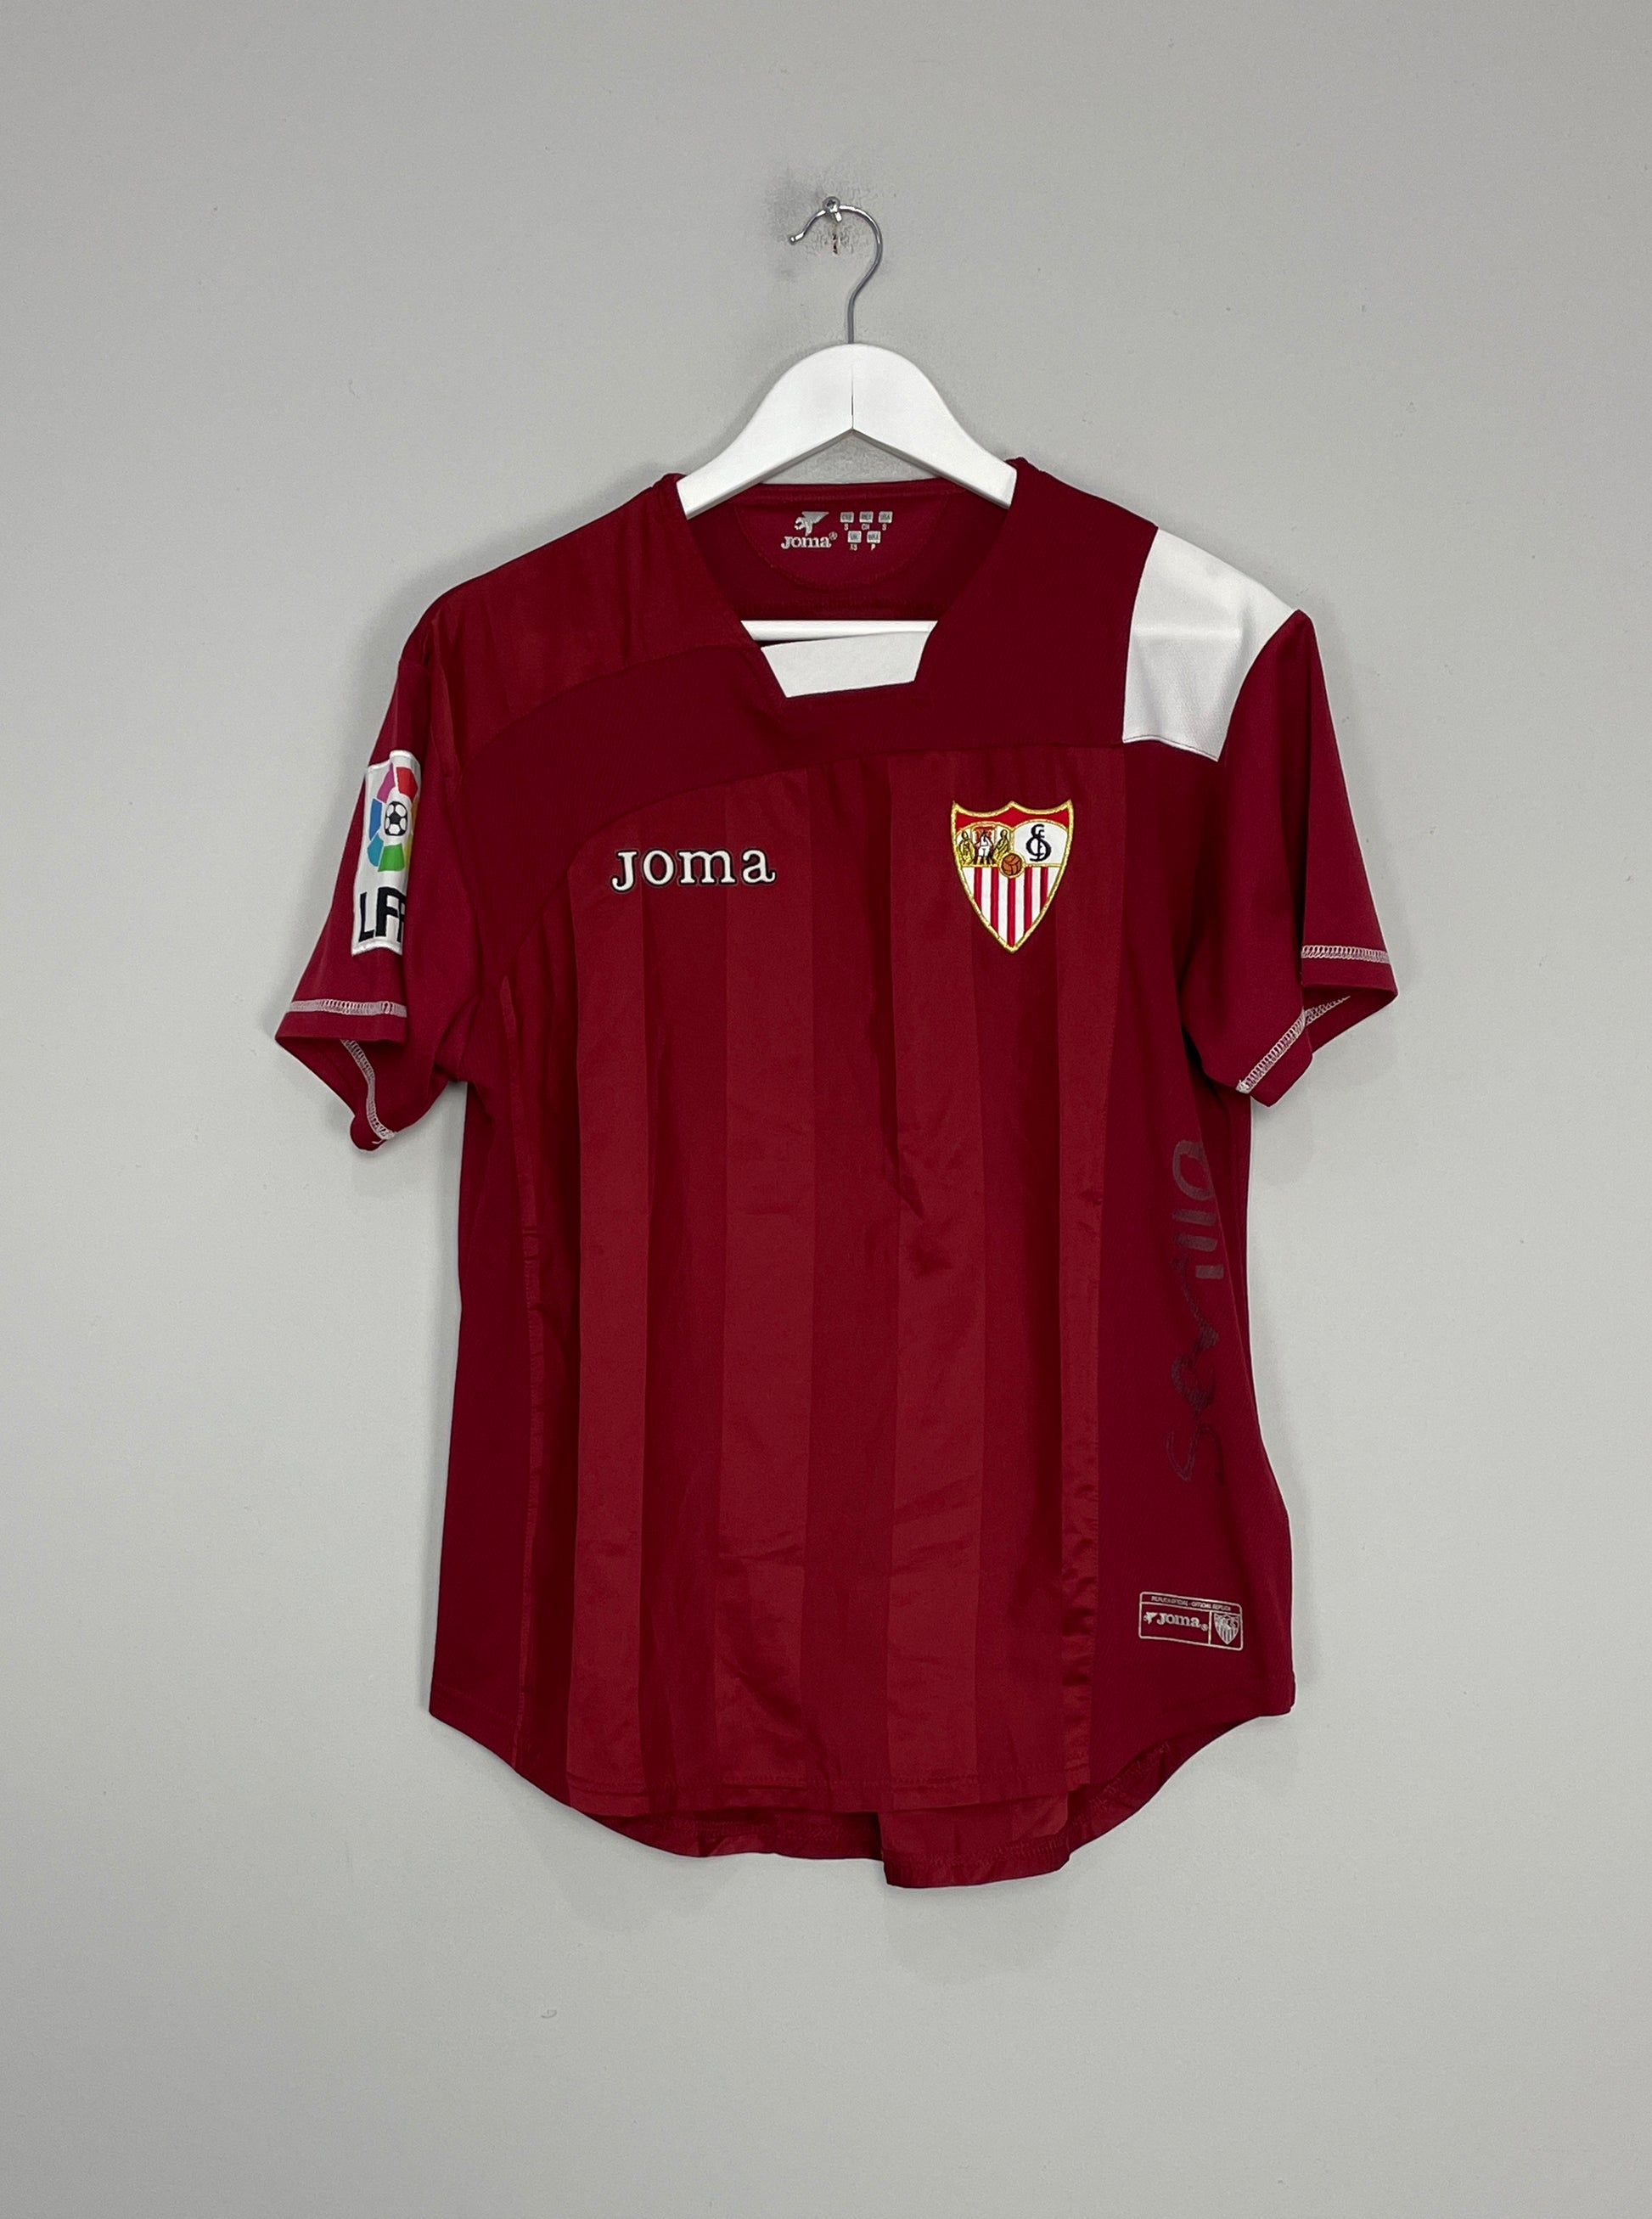 Image of the Sevilla shirt from the 2007/08 season